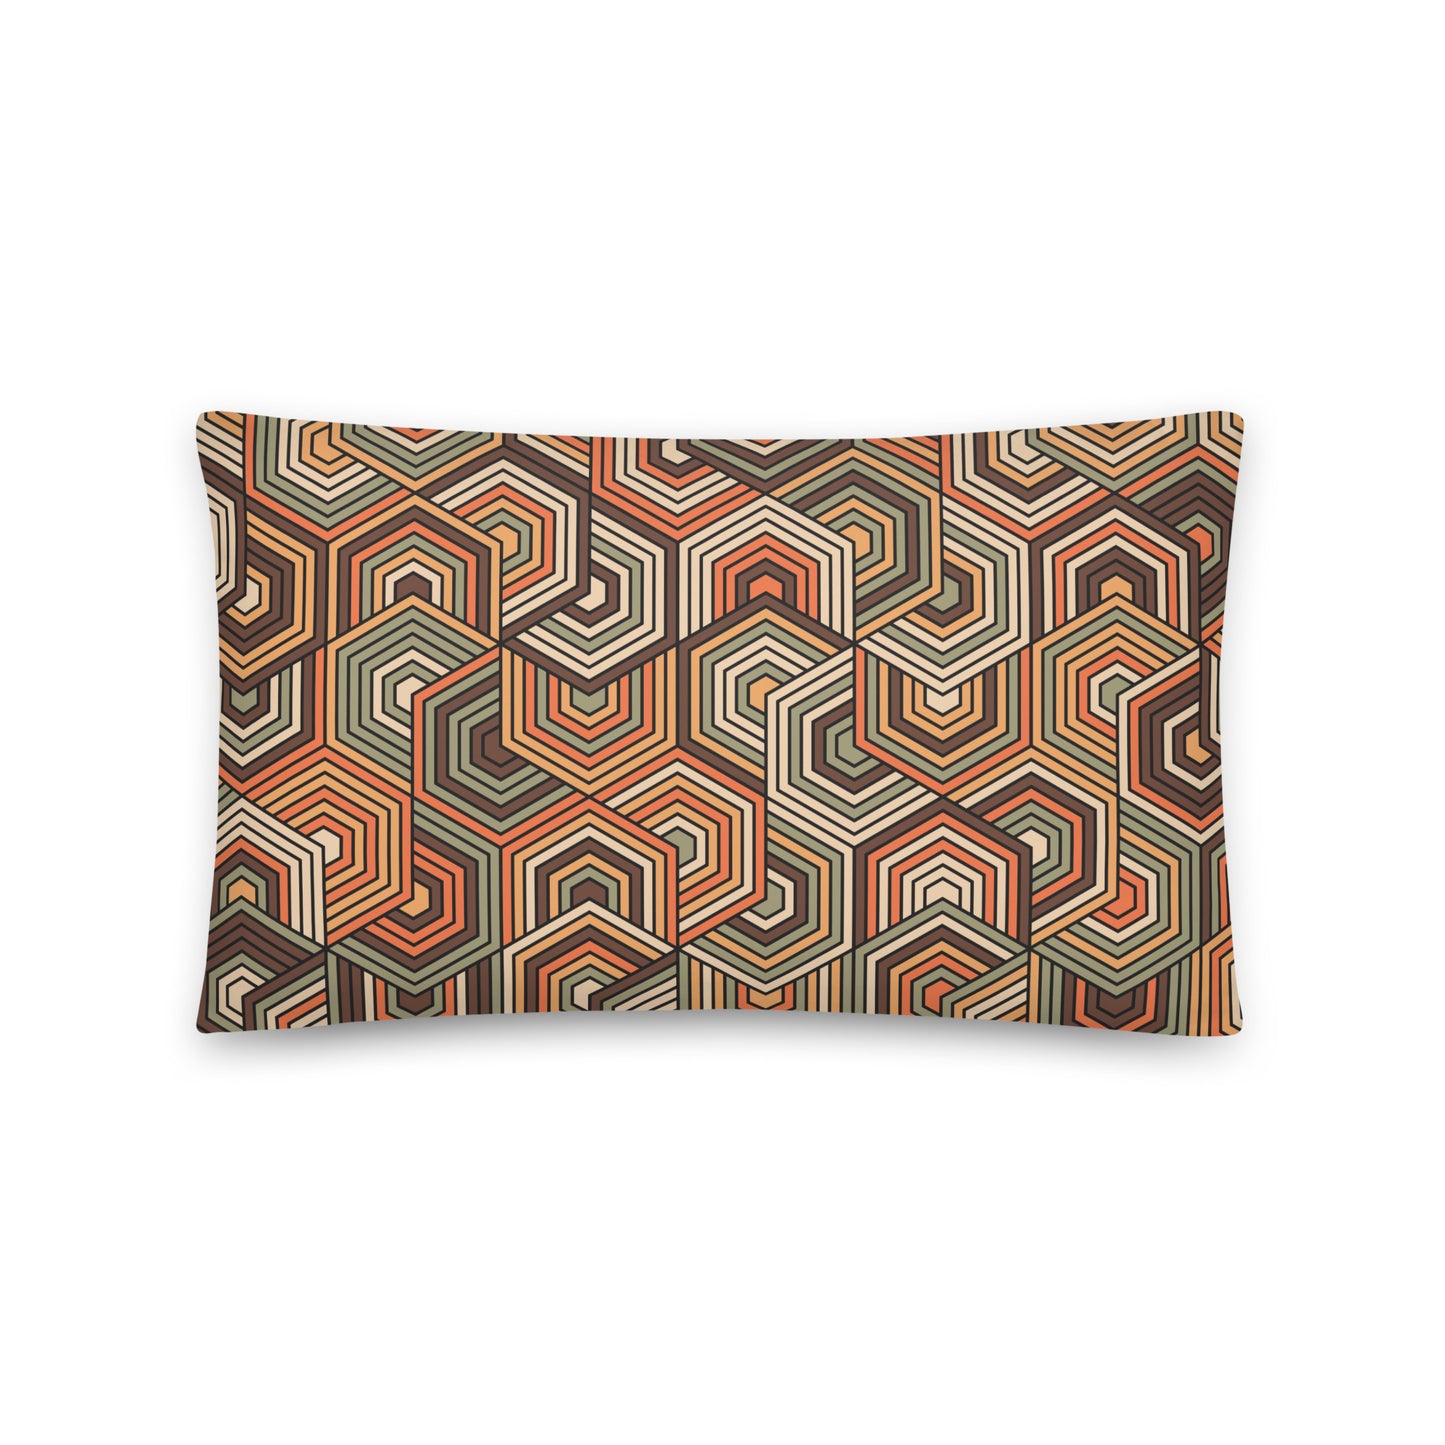 Hexagonal Retro Pattern - Sustainably Made Pillows